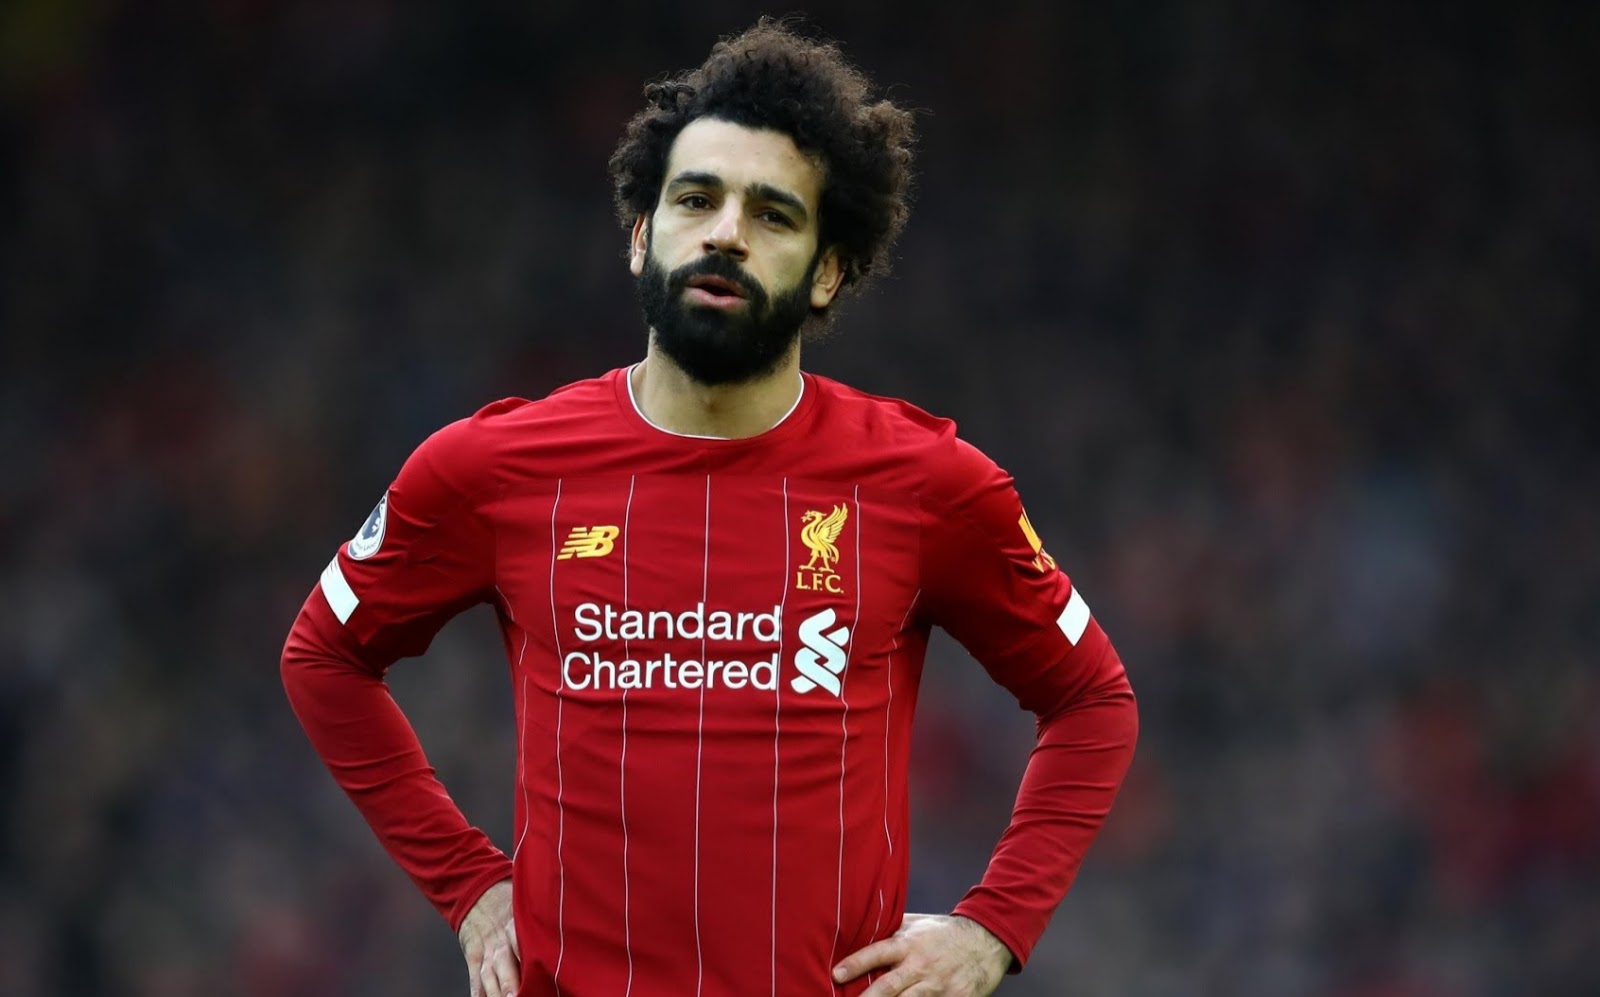 Sell Mohamed Salah - Liverpool fans call for Mohamed Salah exit after